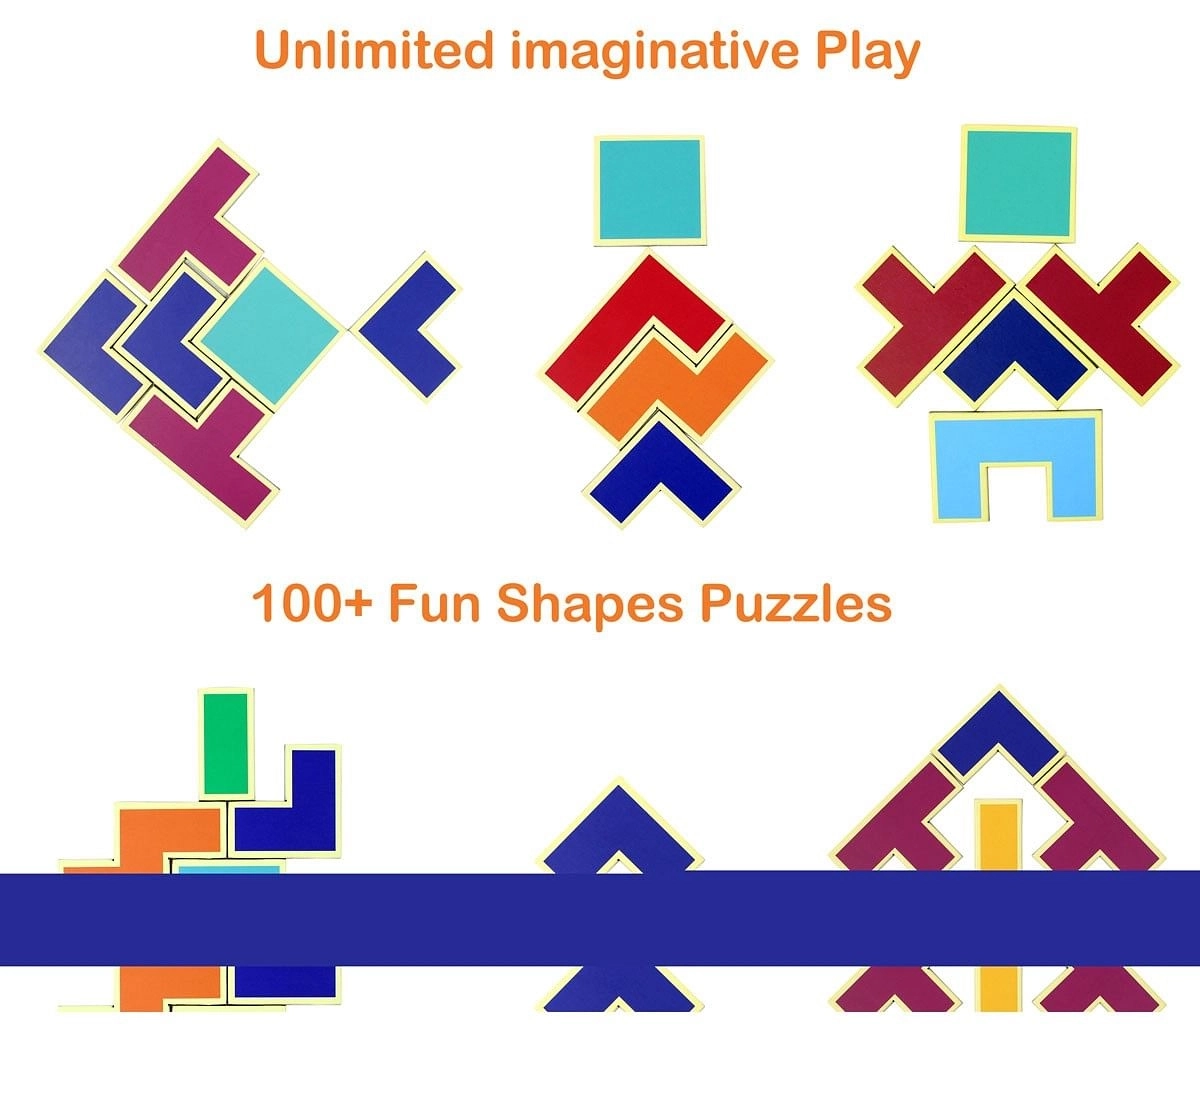 Butterfly Edufields Brain Teaser Puzzles Multicolour 3Y+